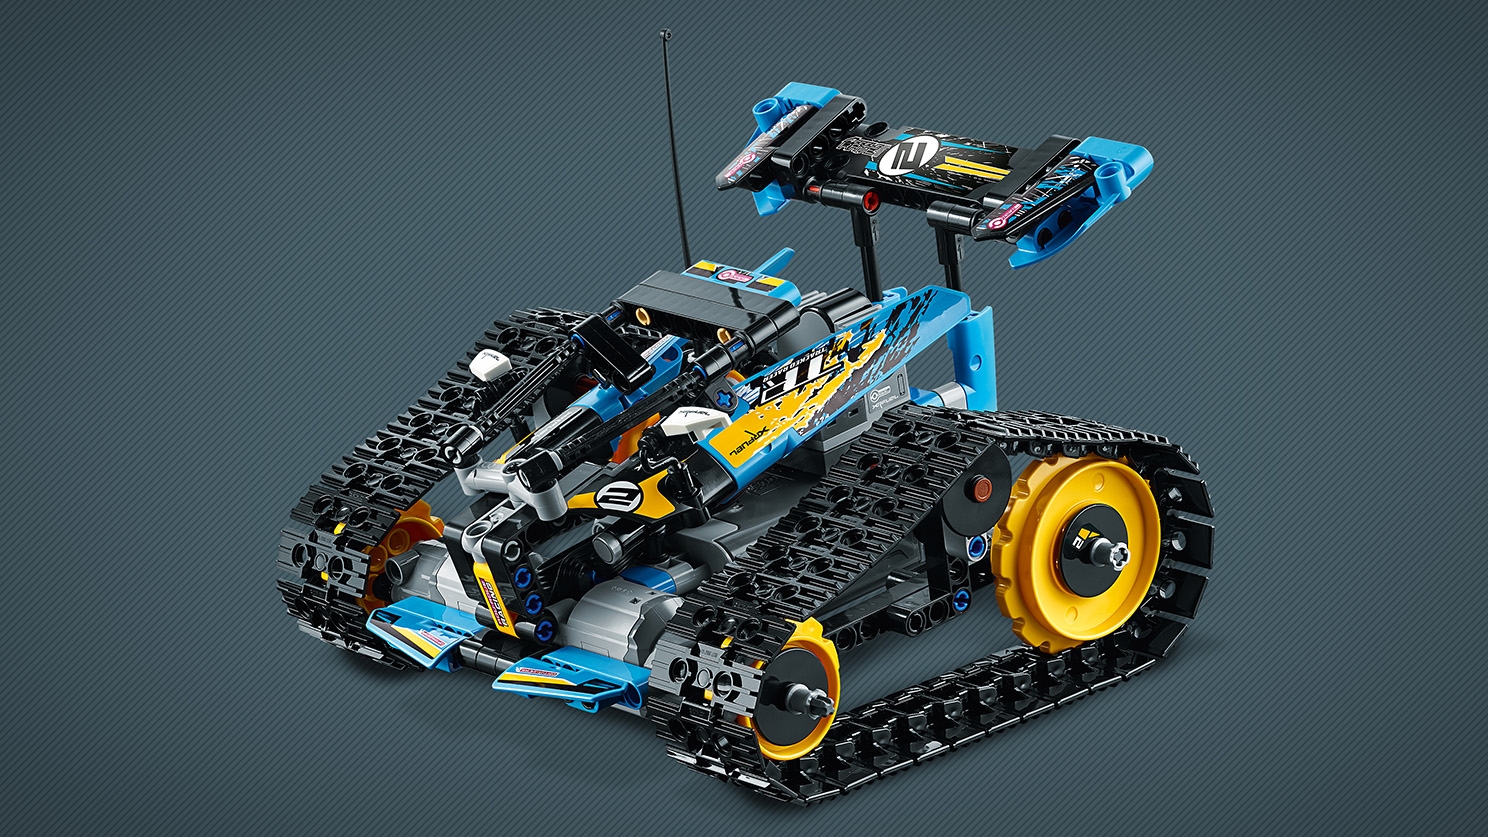 Lego 42095 Technic Remote-Controlled Stunt Racer Building Kit 324 Pcs  sealed 673419303439